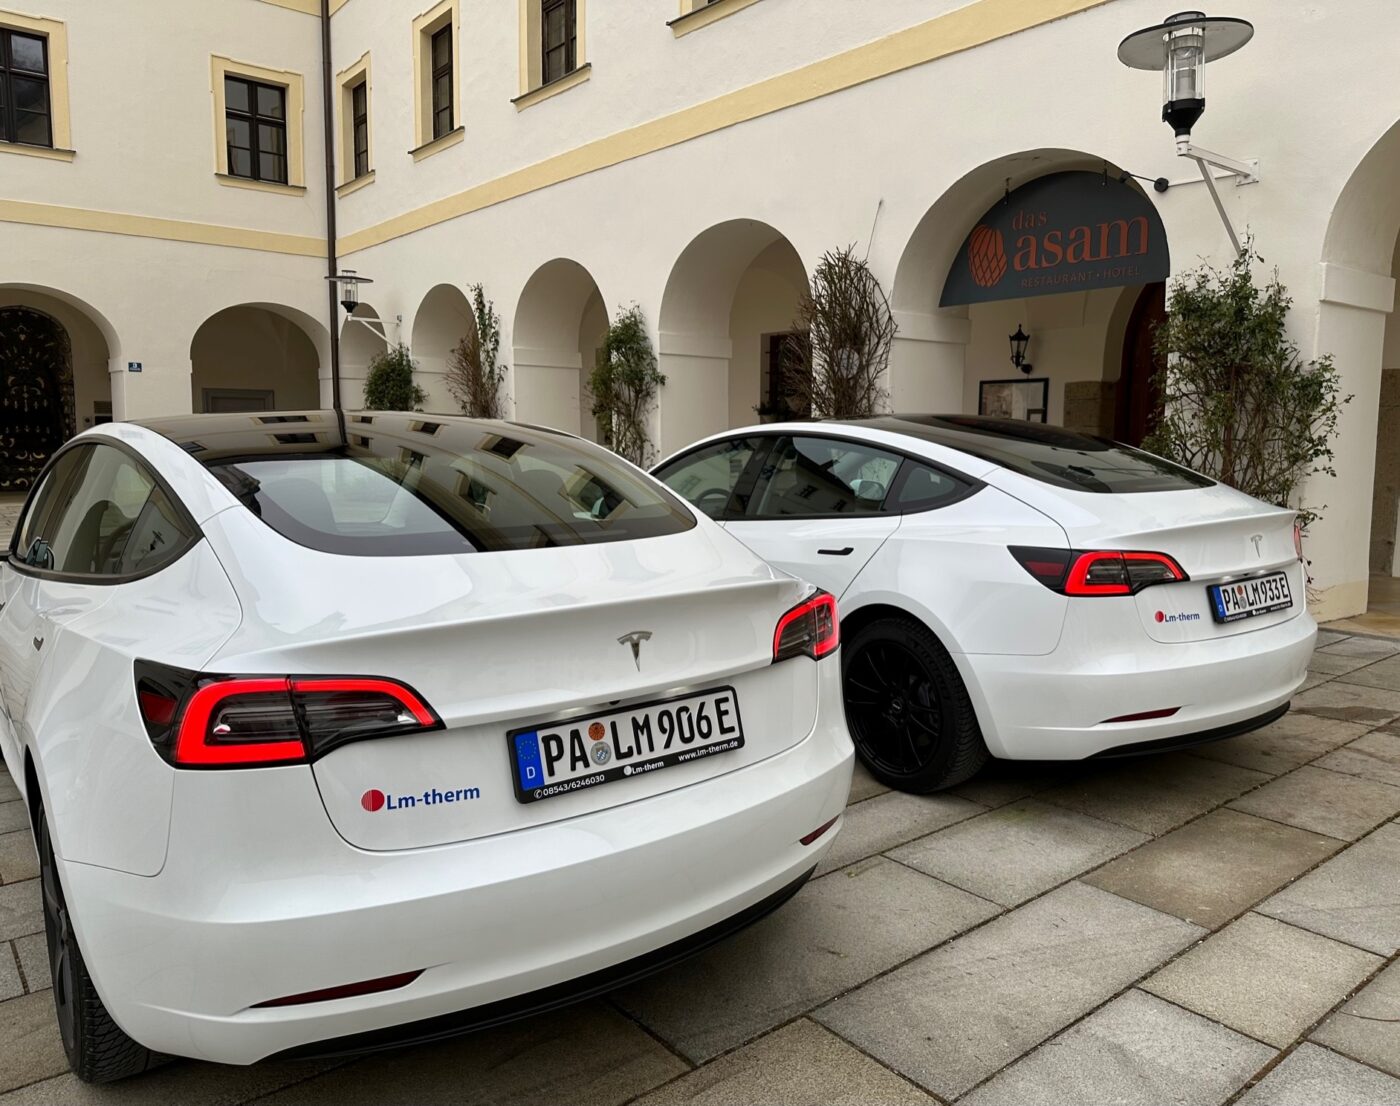 Lm-therms Fuhrpark wird grüner mit 5 Tesla-Fahrzeugen